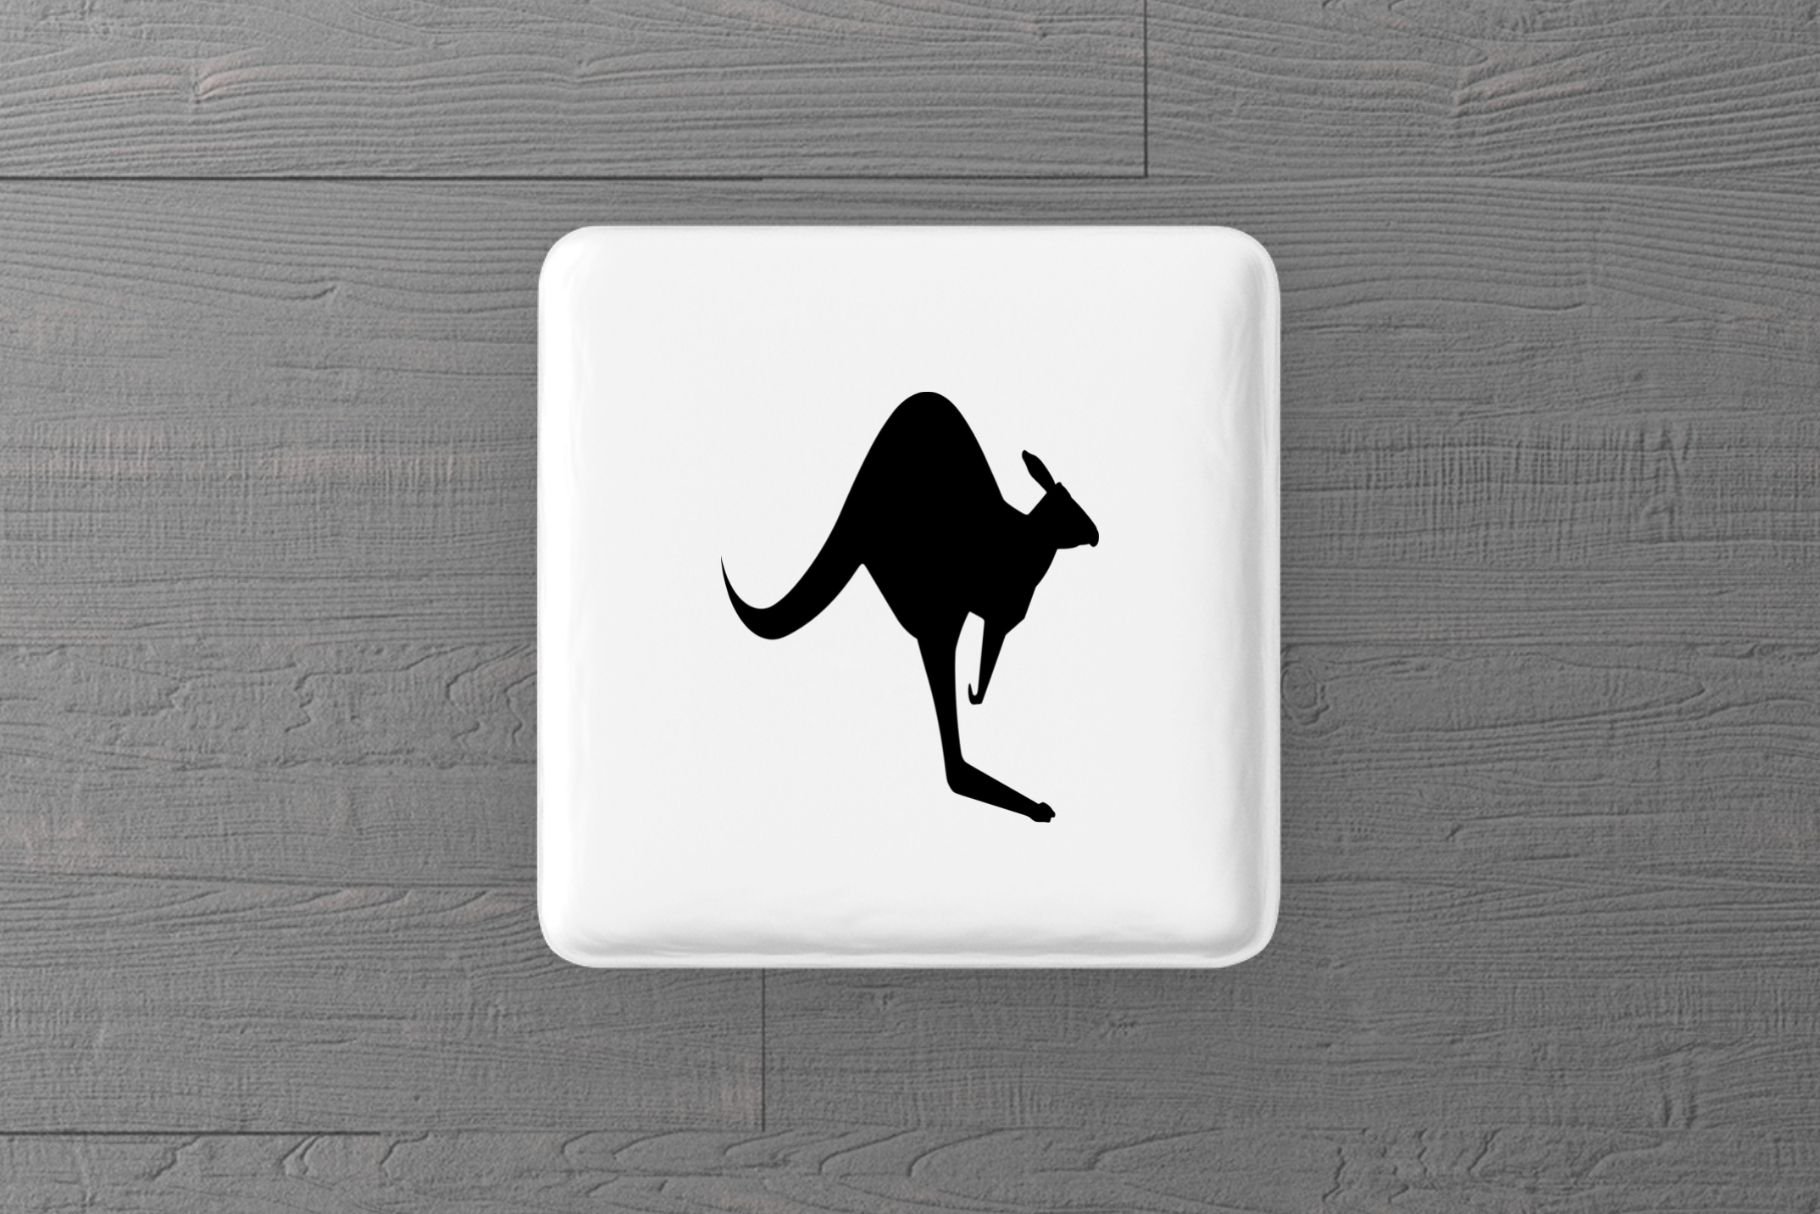 Funny kangaroo position on the white button.